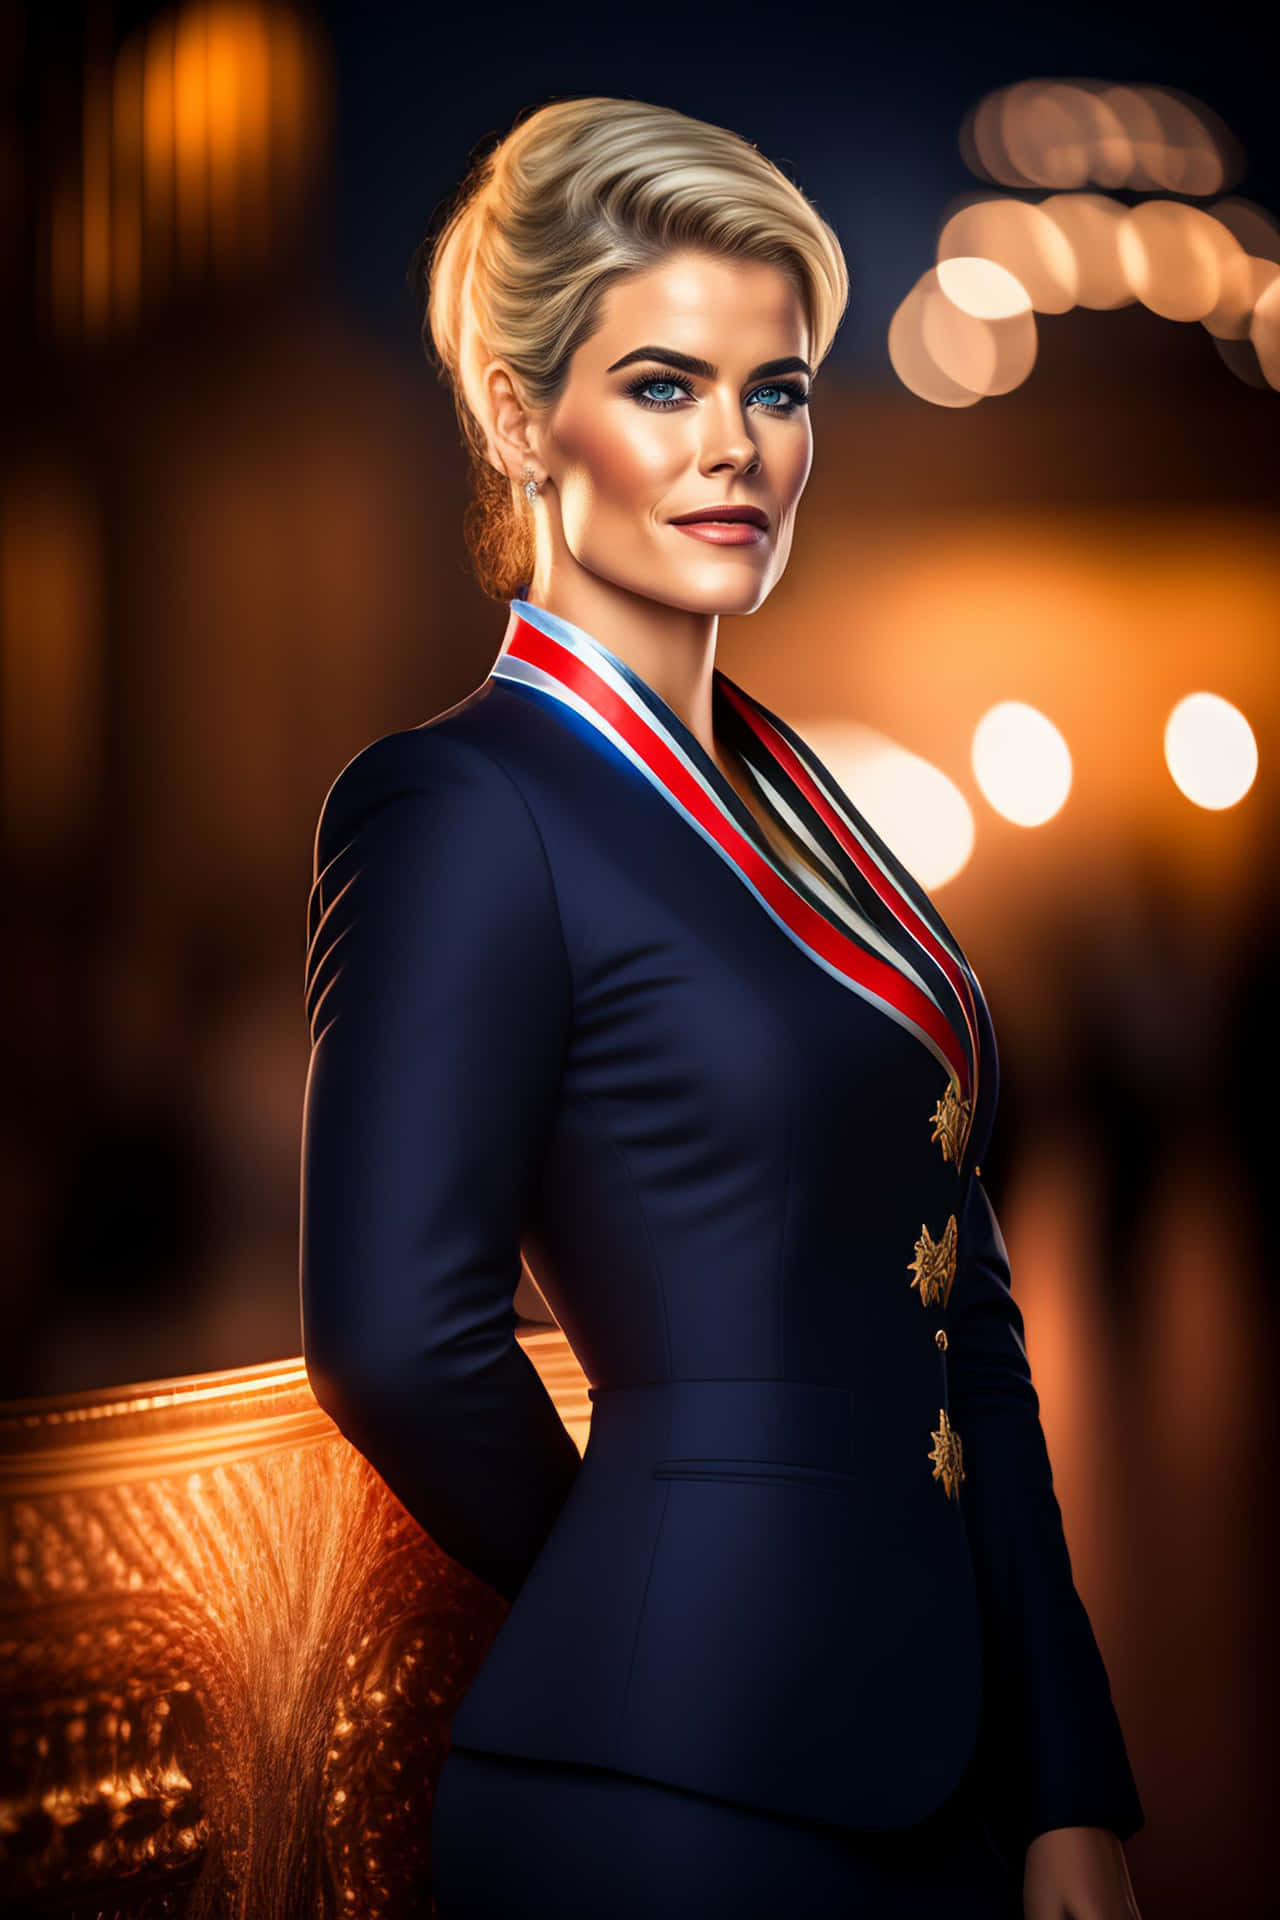 Elegant Blonde Womanin Navy Uniform Background